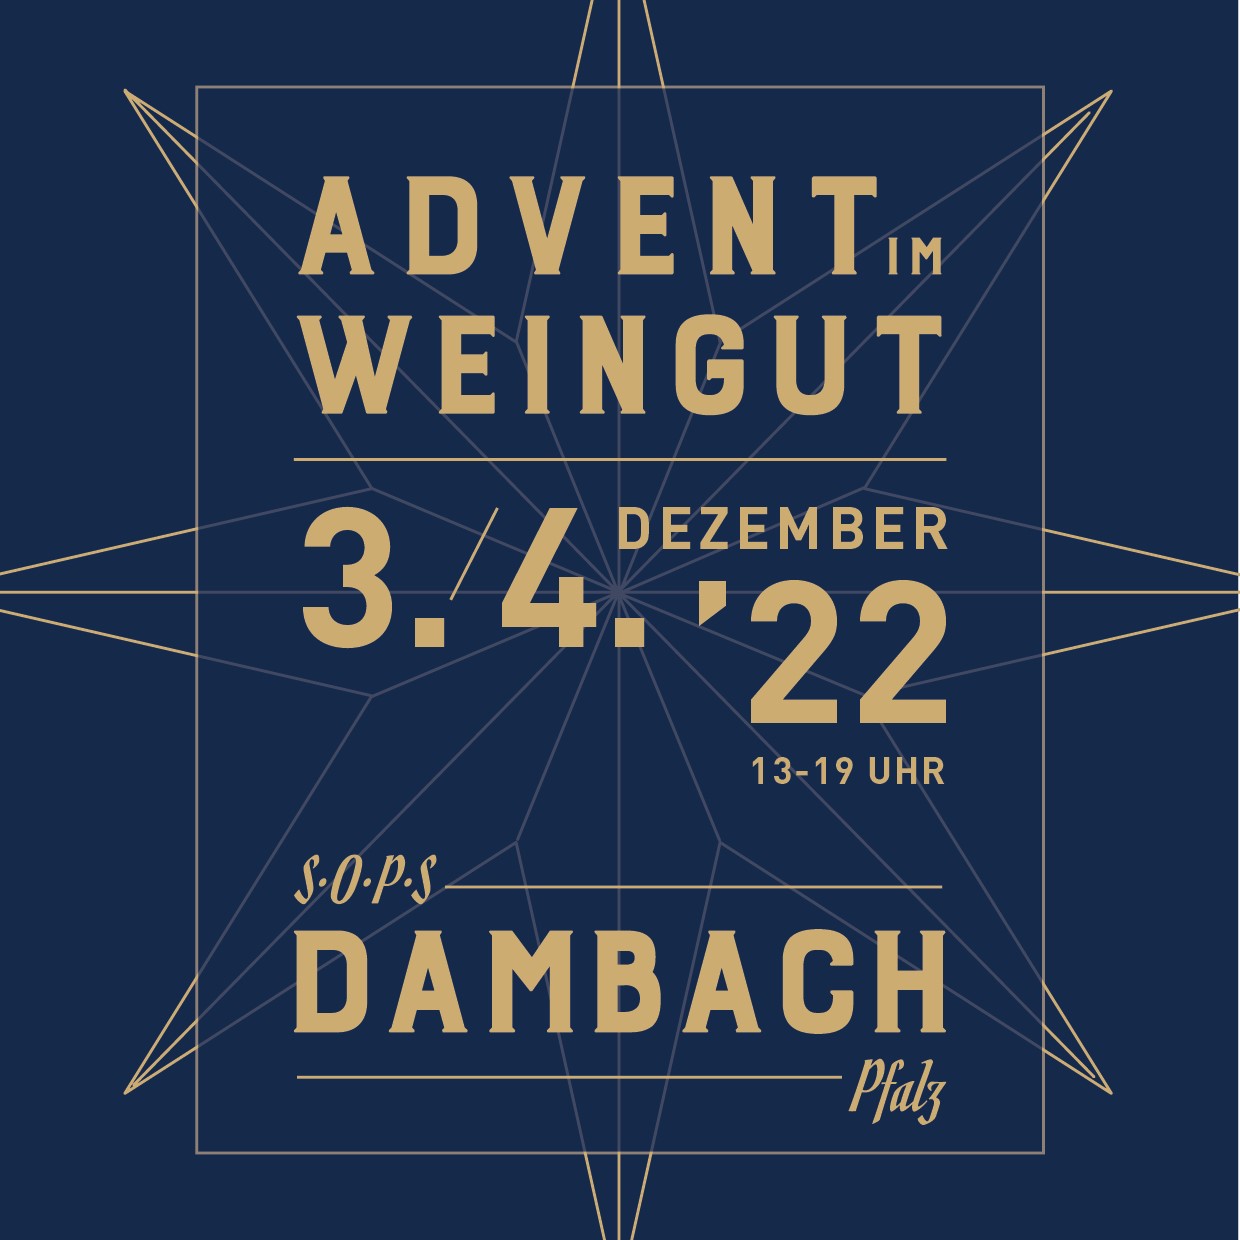 Dambach - Advent im Weingut am 3. & 4. 12. 2022